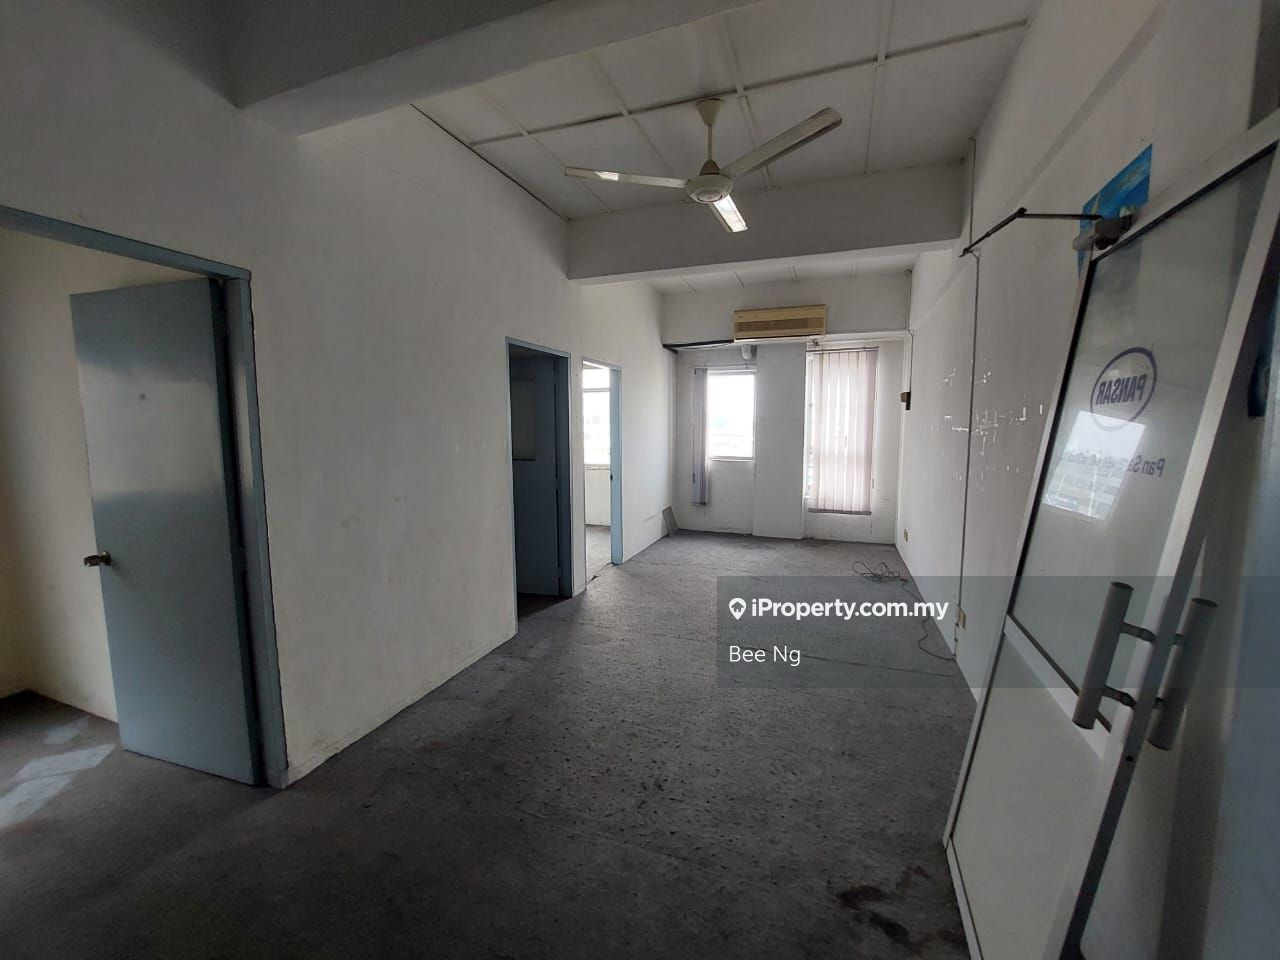 Taman Malim jaya, pangsapuri anggerik 1 1st floor unit for sale